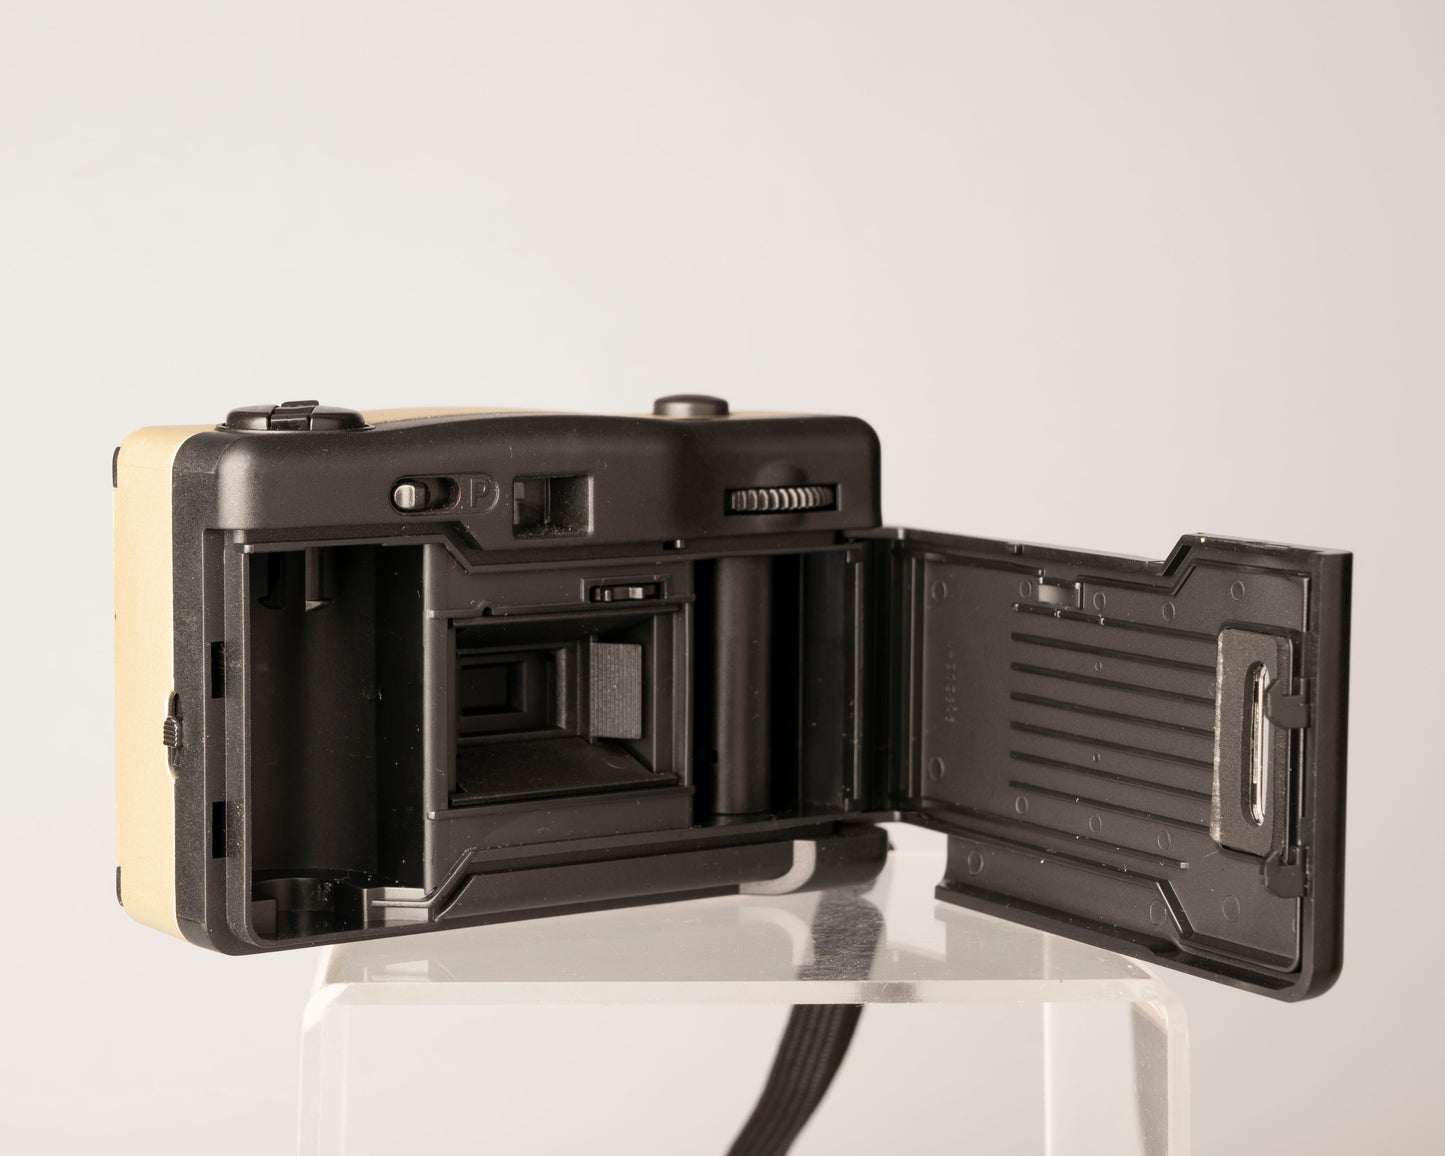 Vivitar PN2011 wide-angle 35mm film camera w/ box and manual